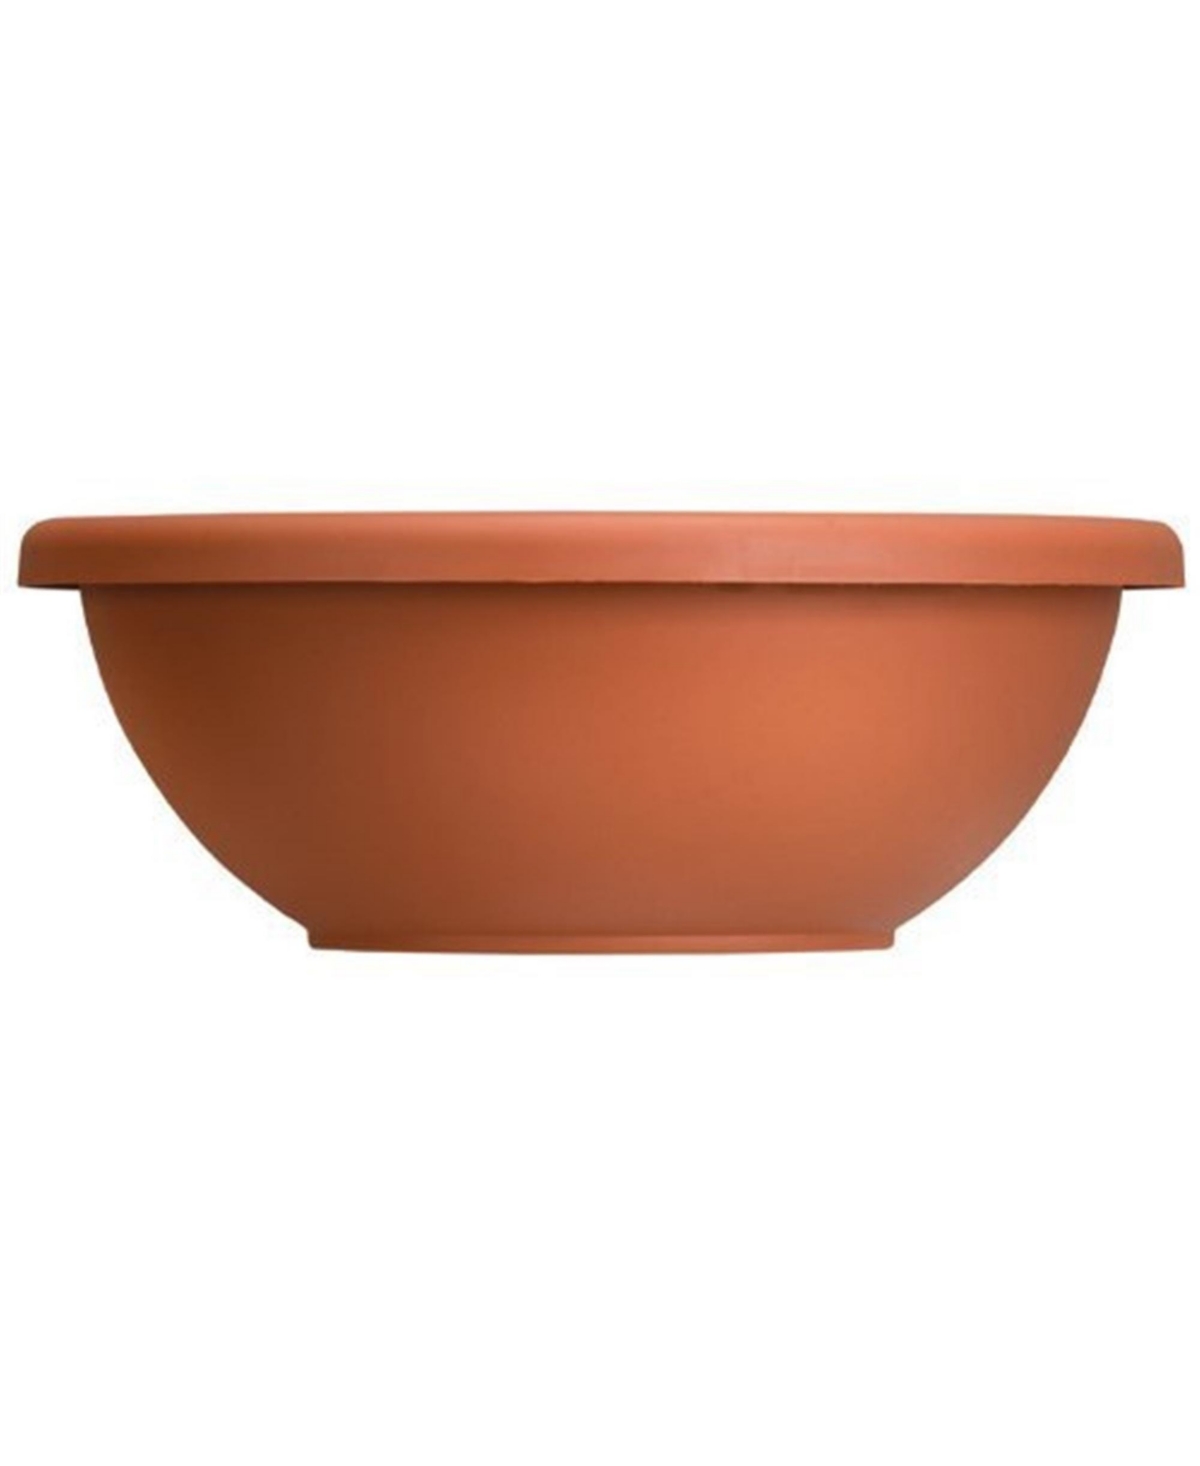 Hc Companies Round Plastic Garden Bowl Planter Clay Color 12 Inch - Terracotta